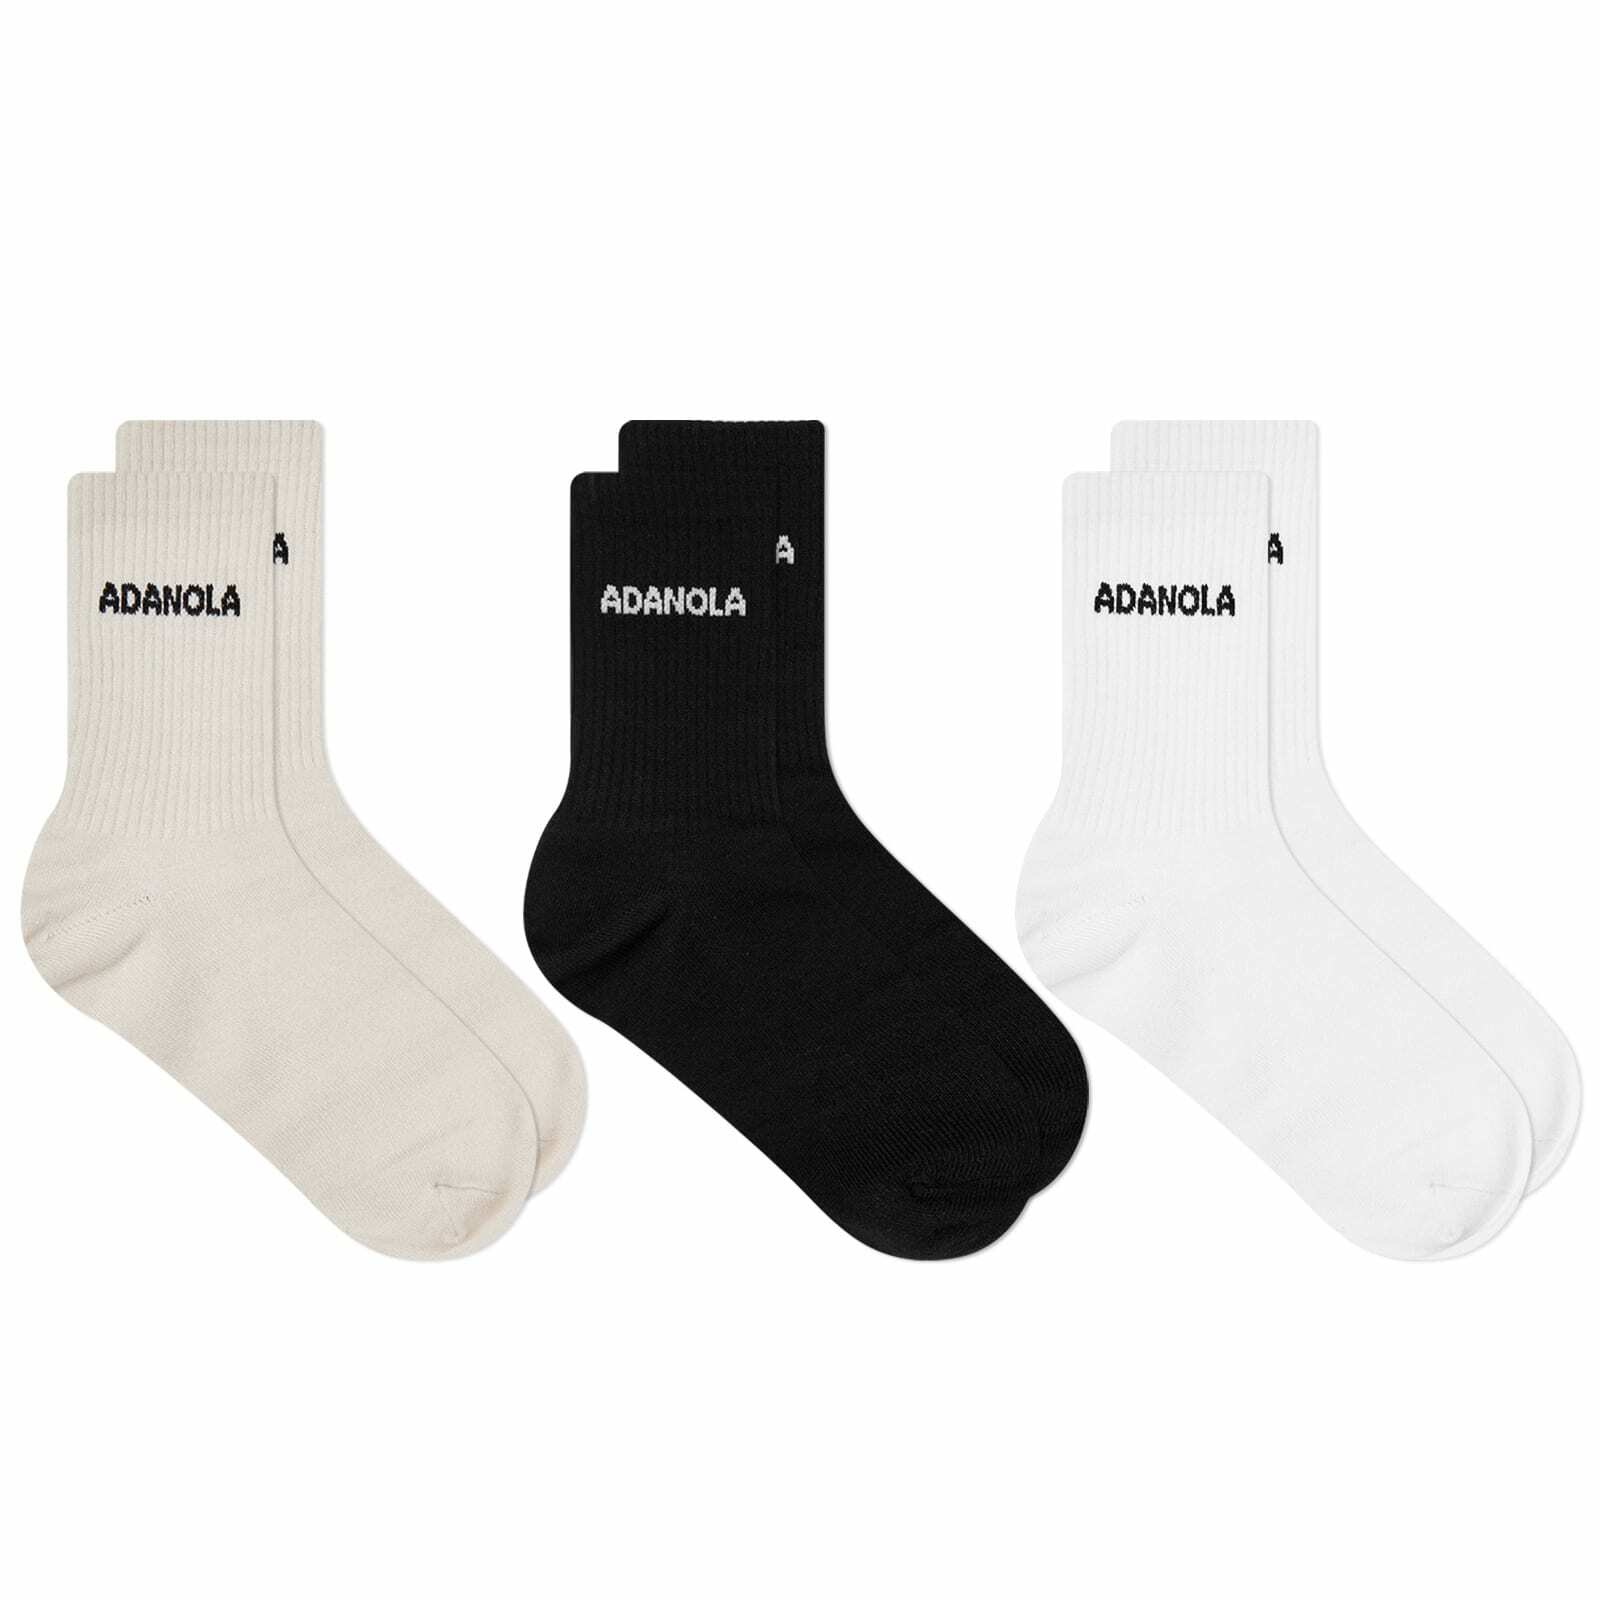 Adanola Women's Sock - 3 Pack in Cream/Black/White Adanola